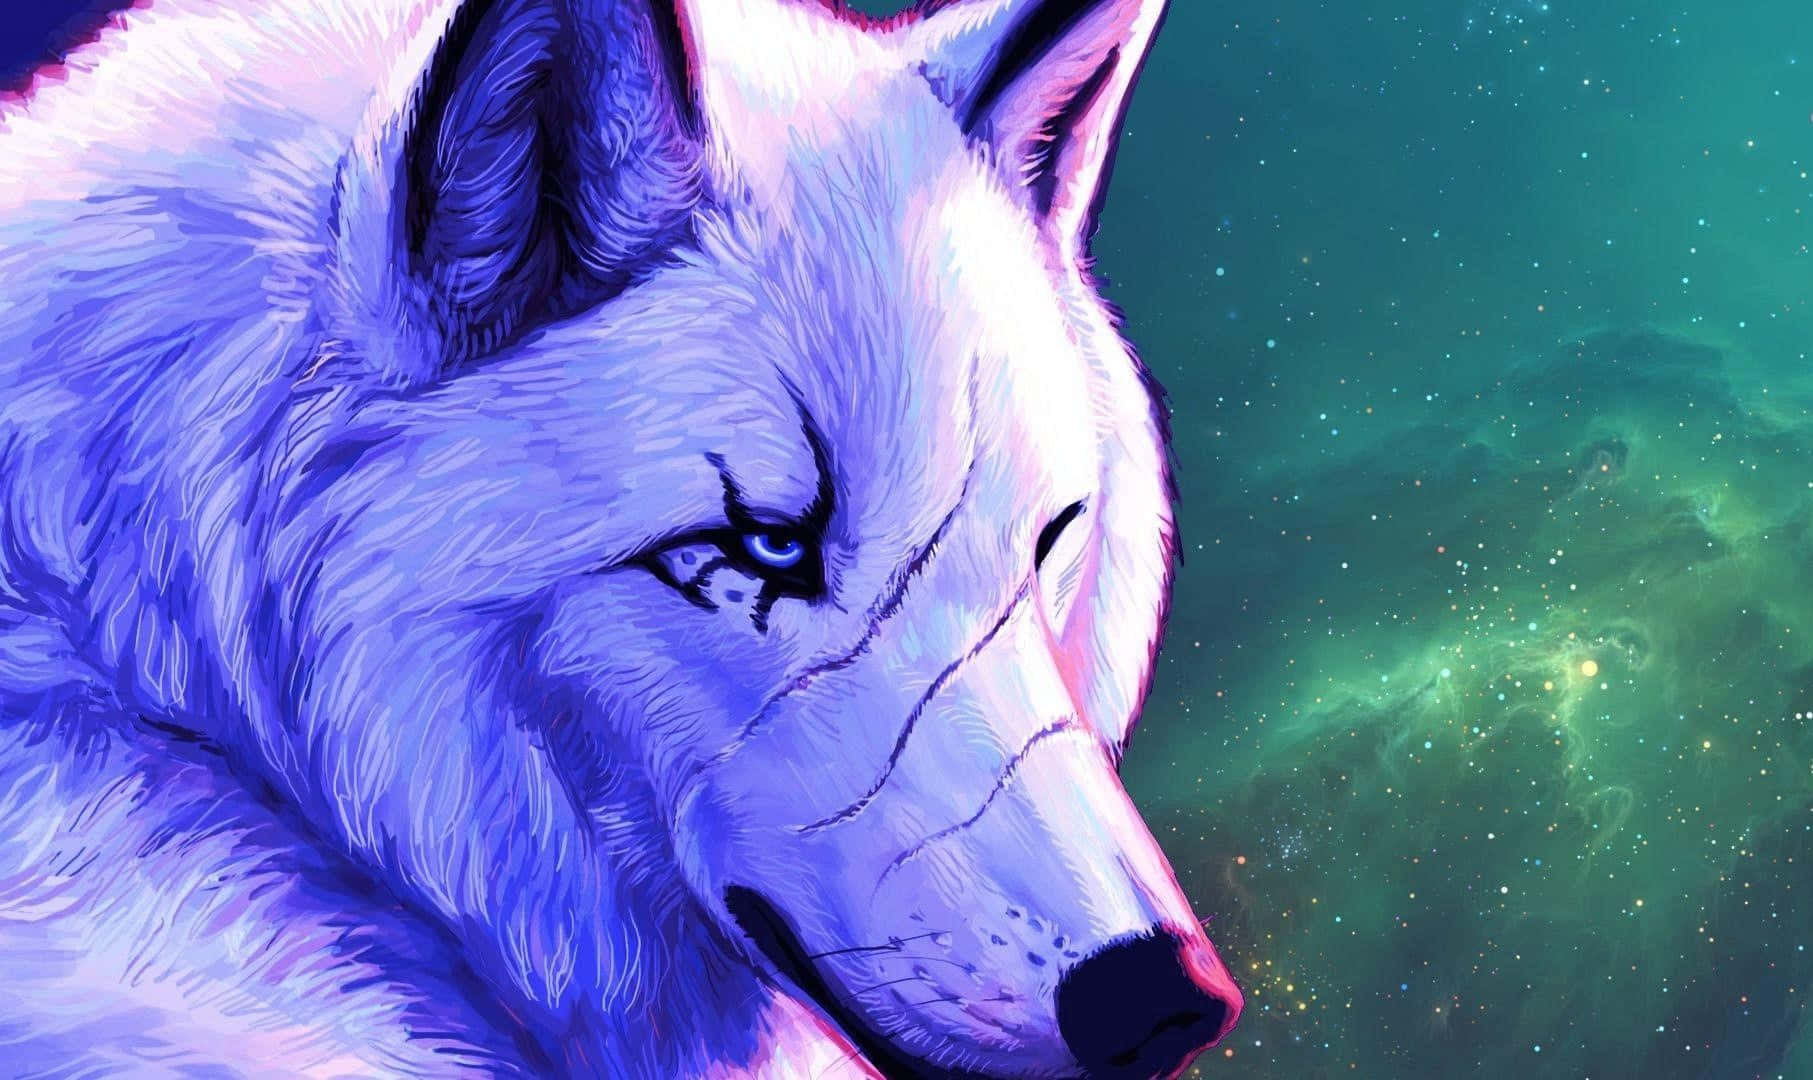 Majestic Lone Wolf in a 3D Fantasy World Wallpaper